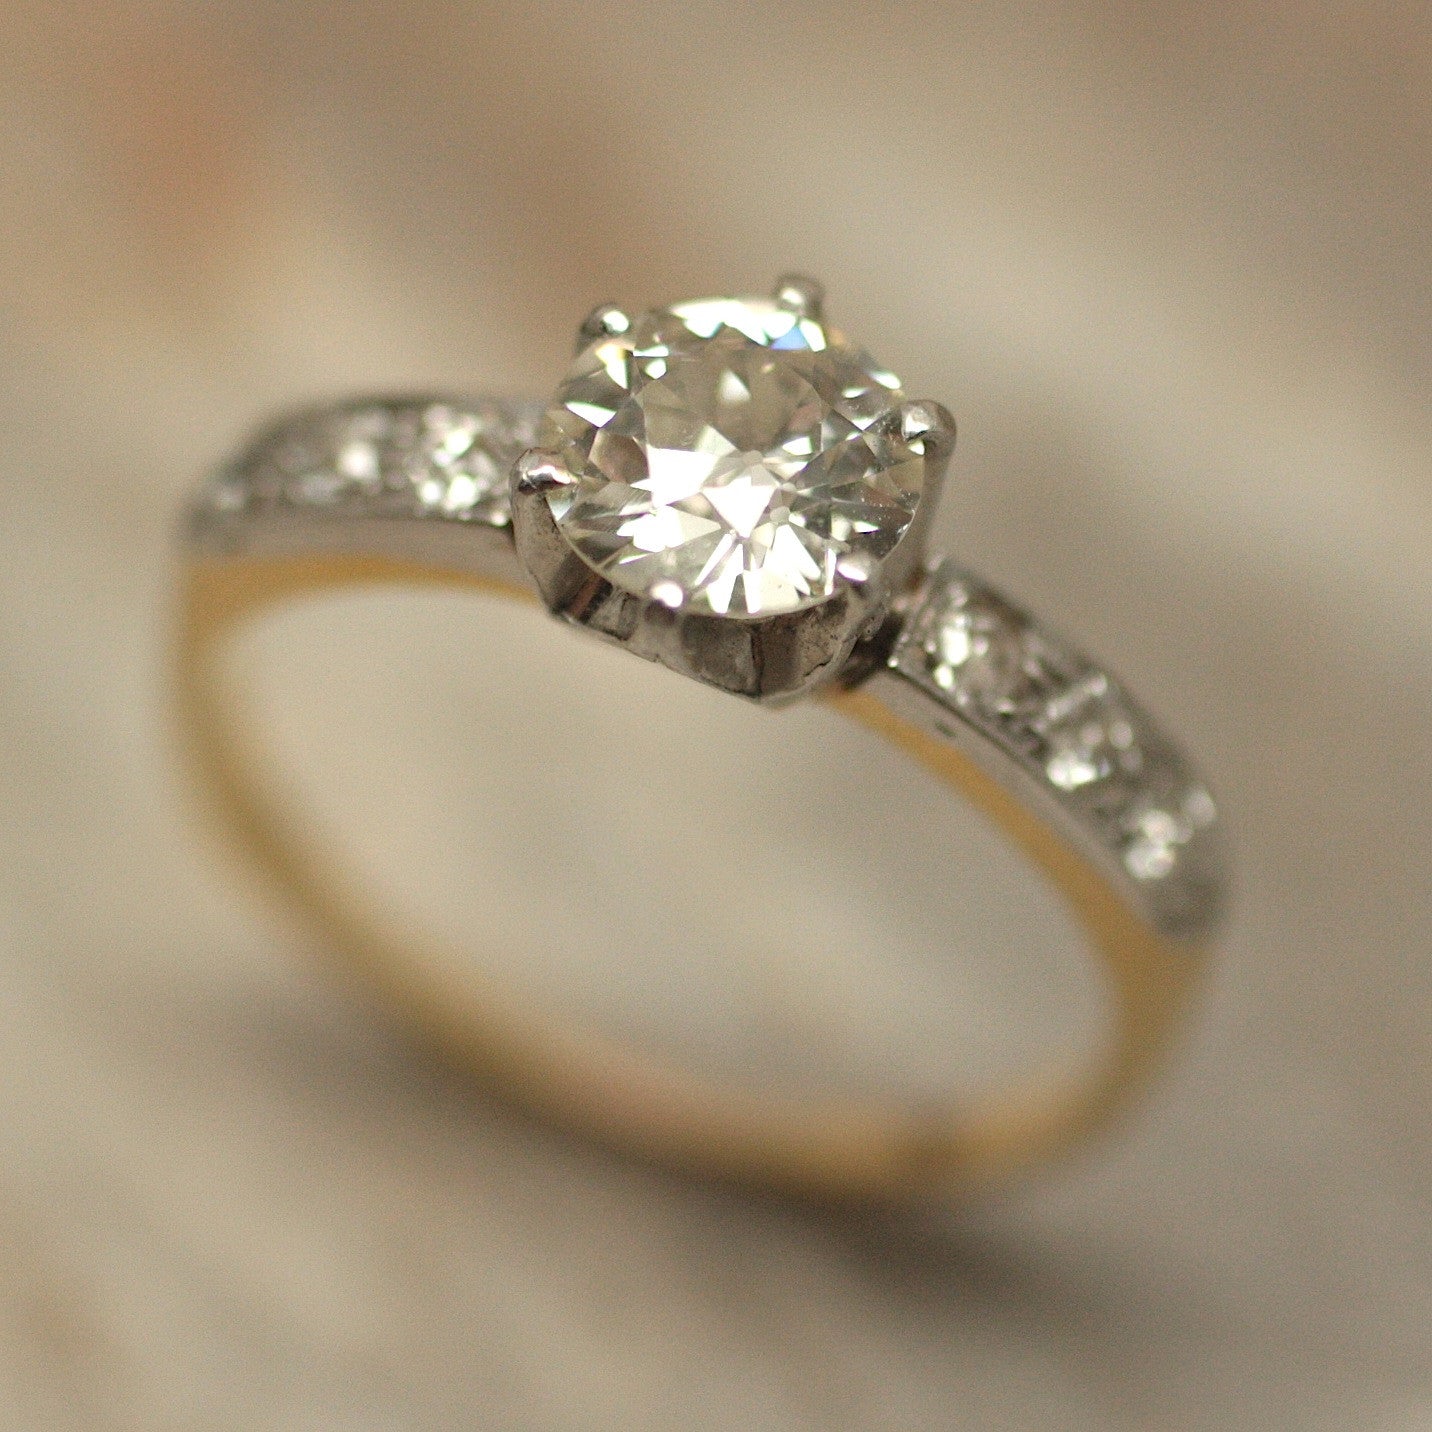 Circa 1920 18K&Platinum Diamond Engagement Ring